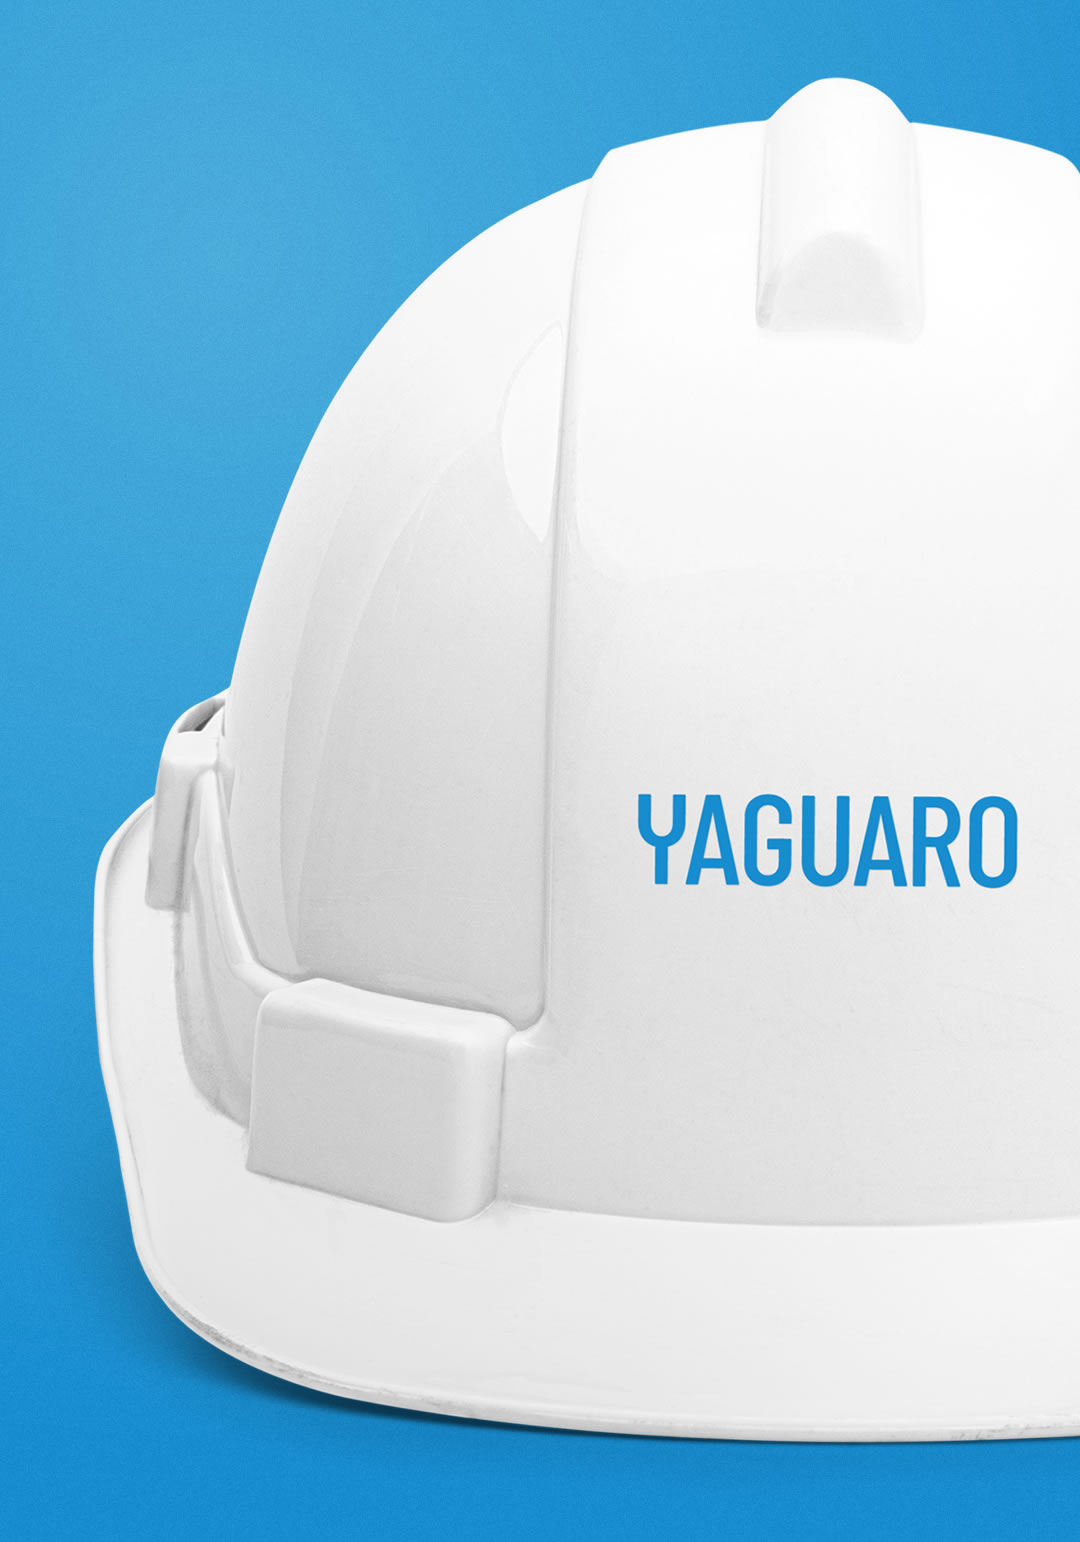 Yaguaro › Naming, branding y diseño web (logotipo)